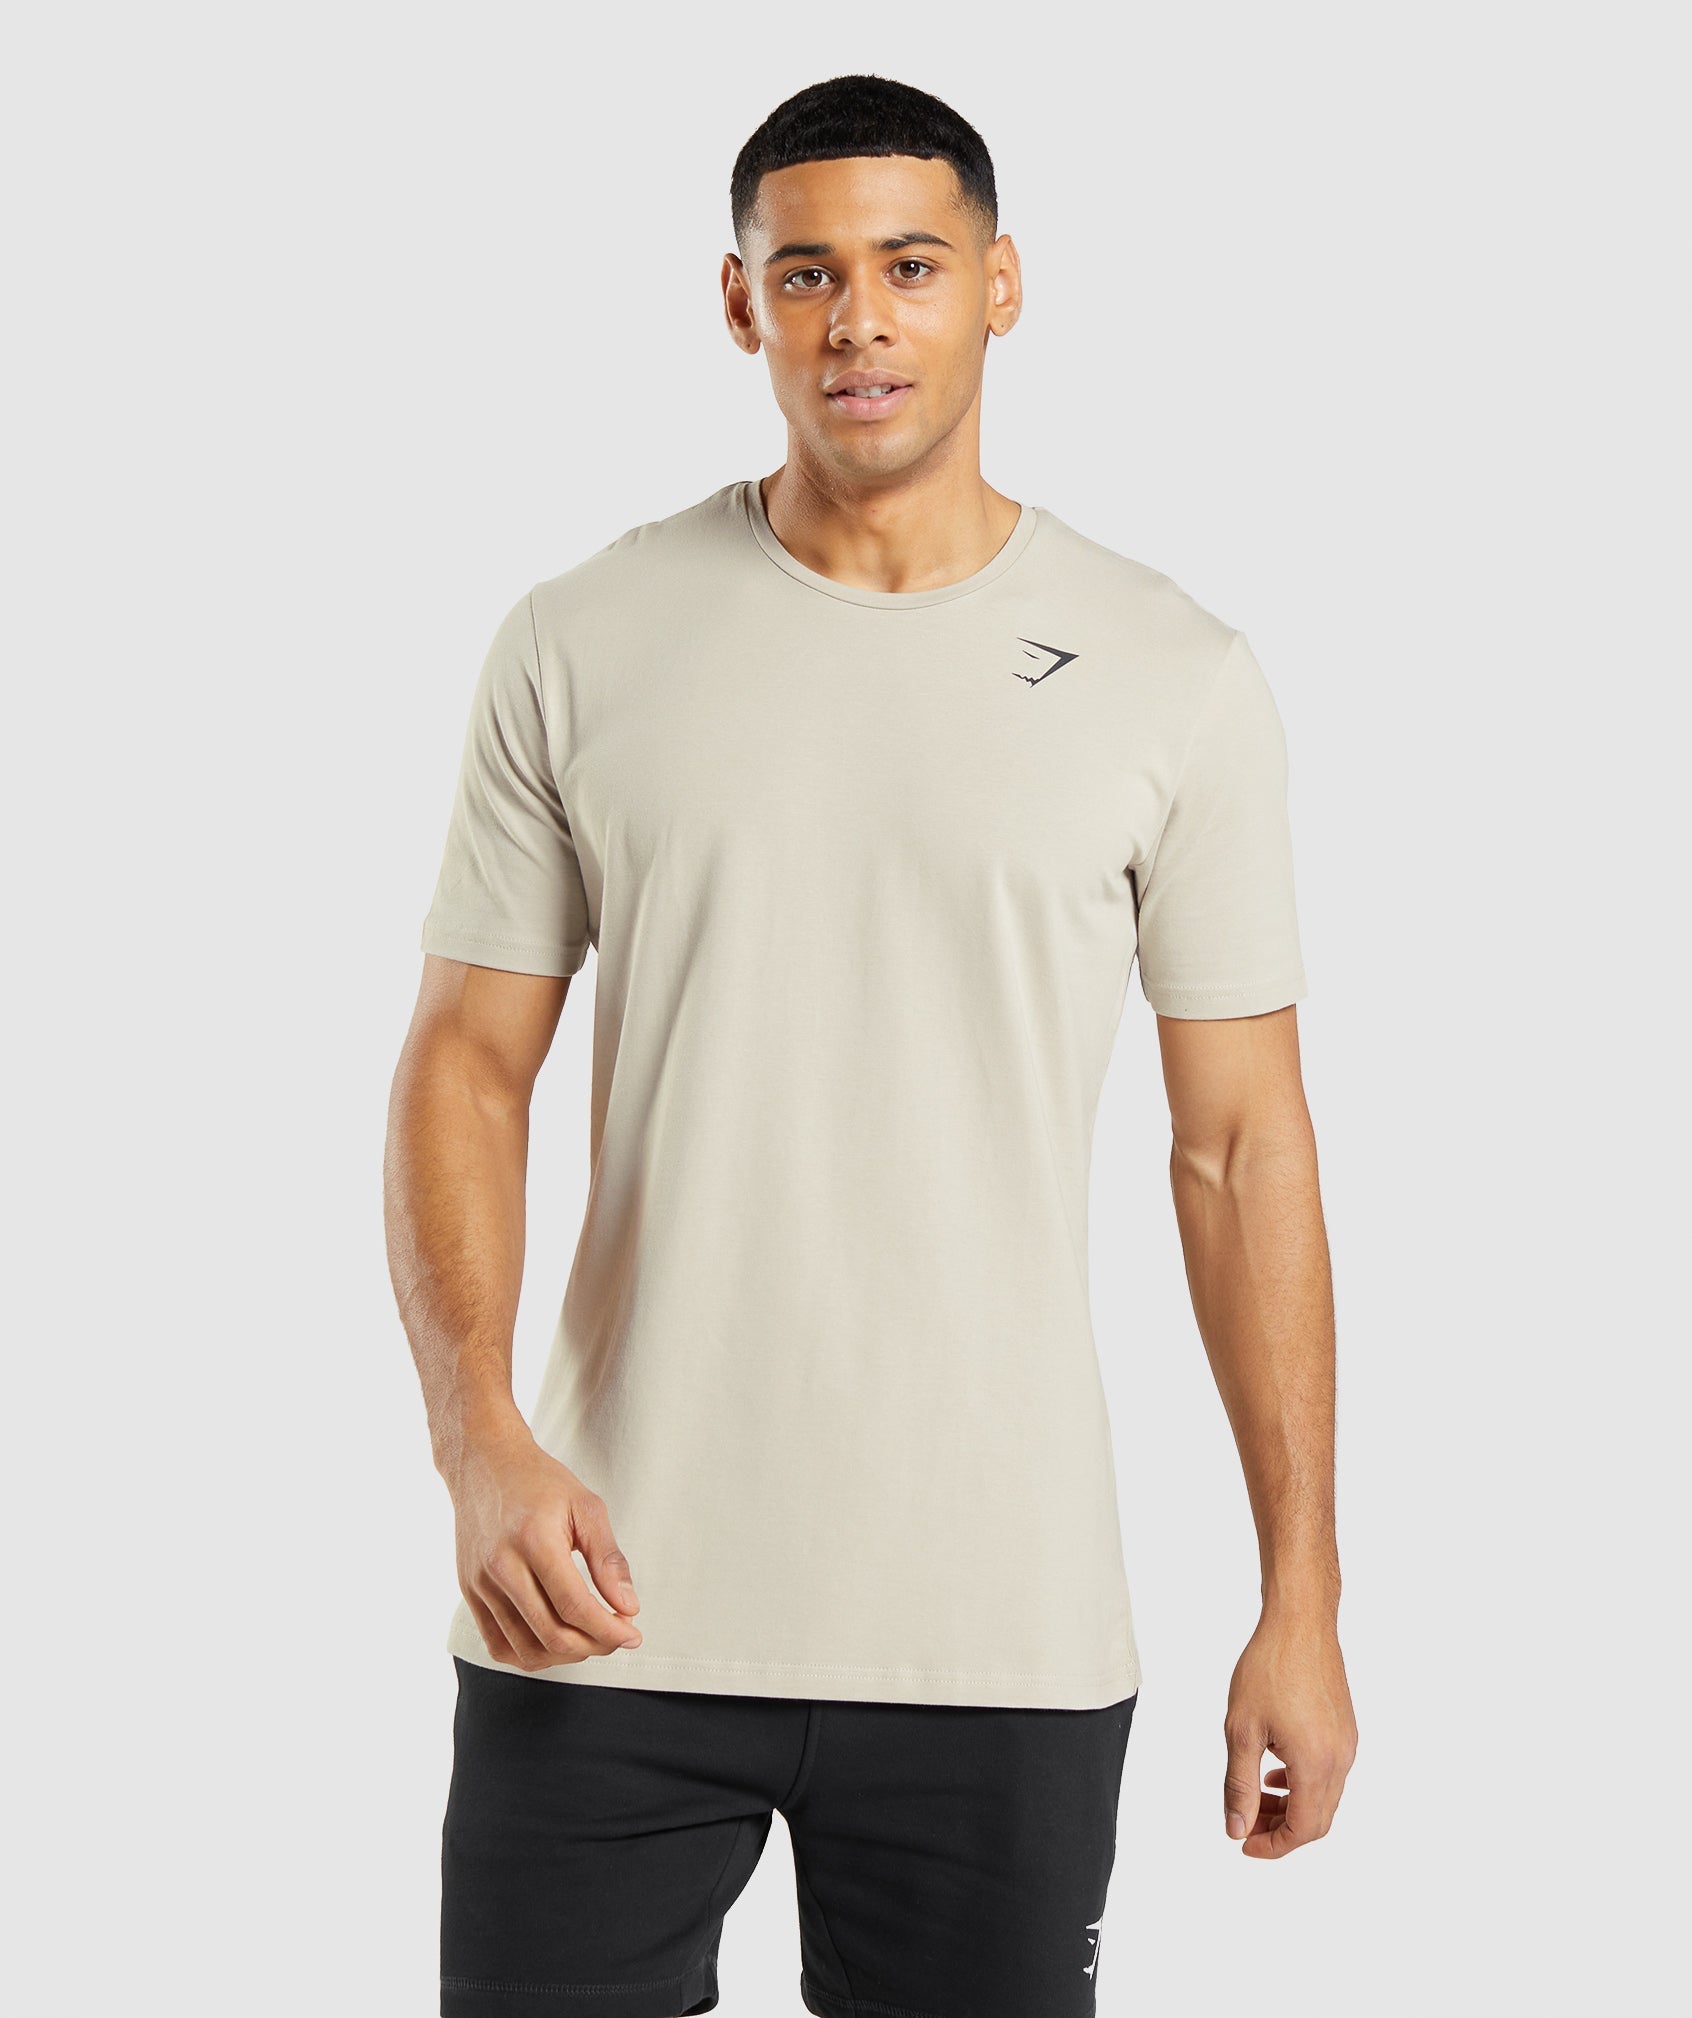 Gymshark Essential T-Shirt - White